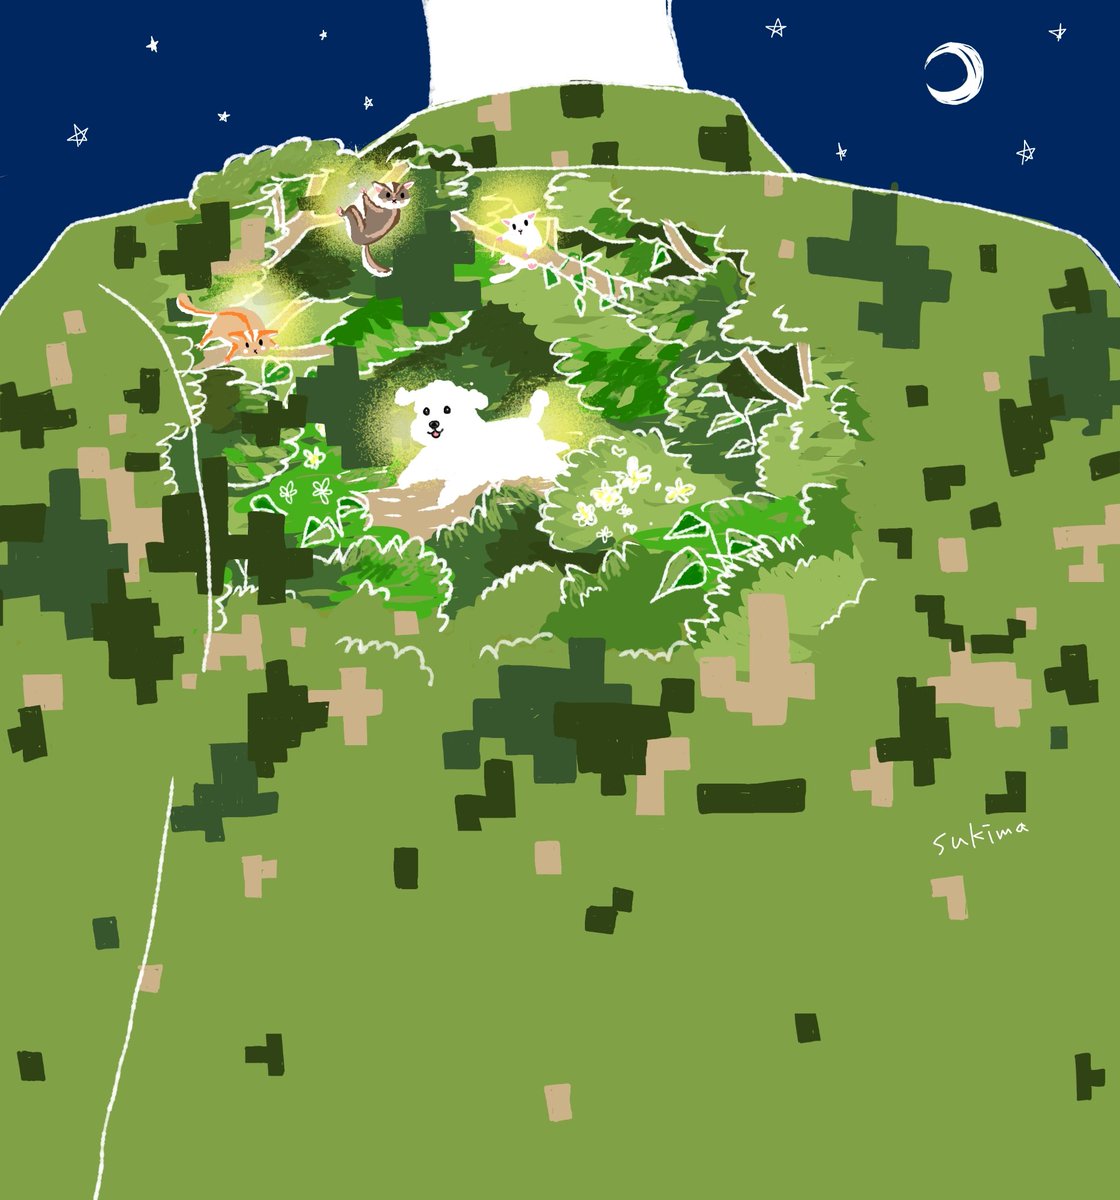 moon tree crescent moon night grass bear star (sky)  illustration images